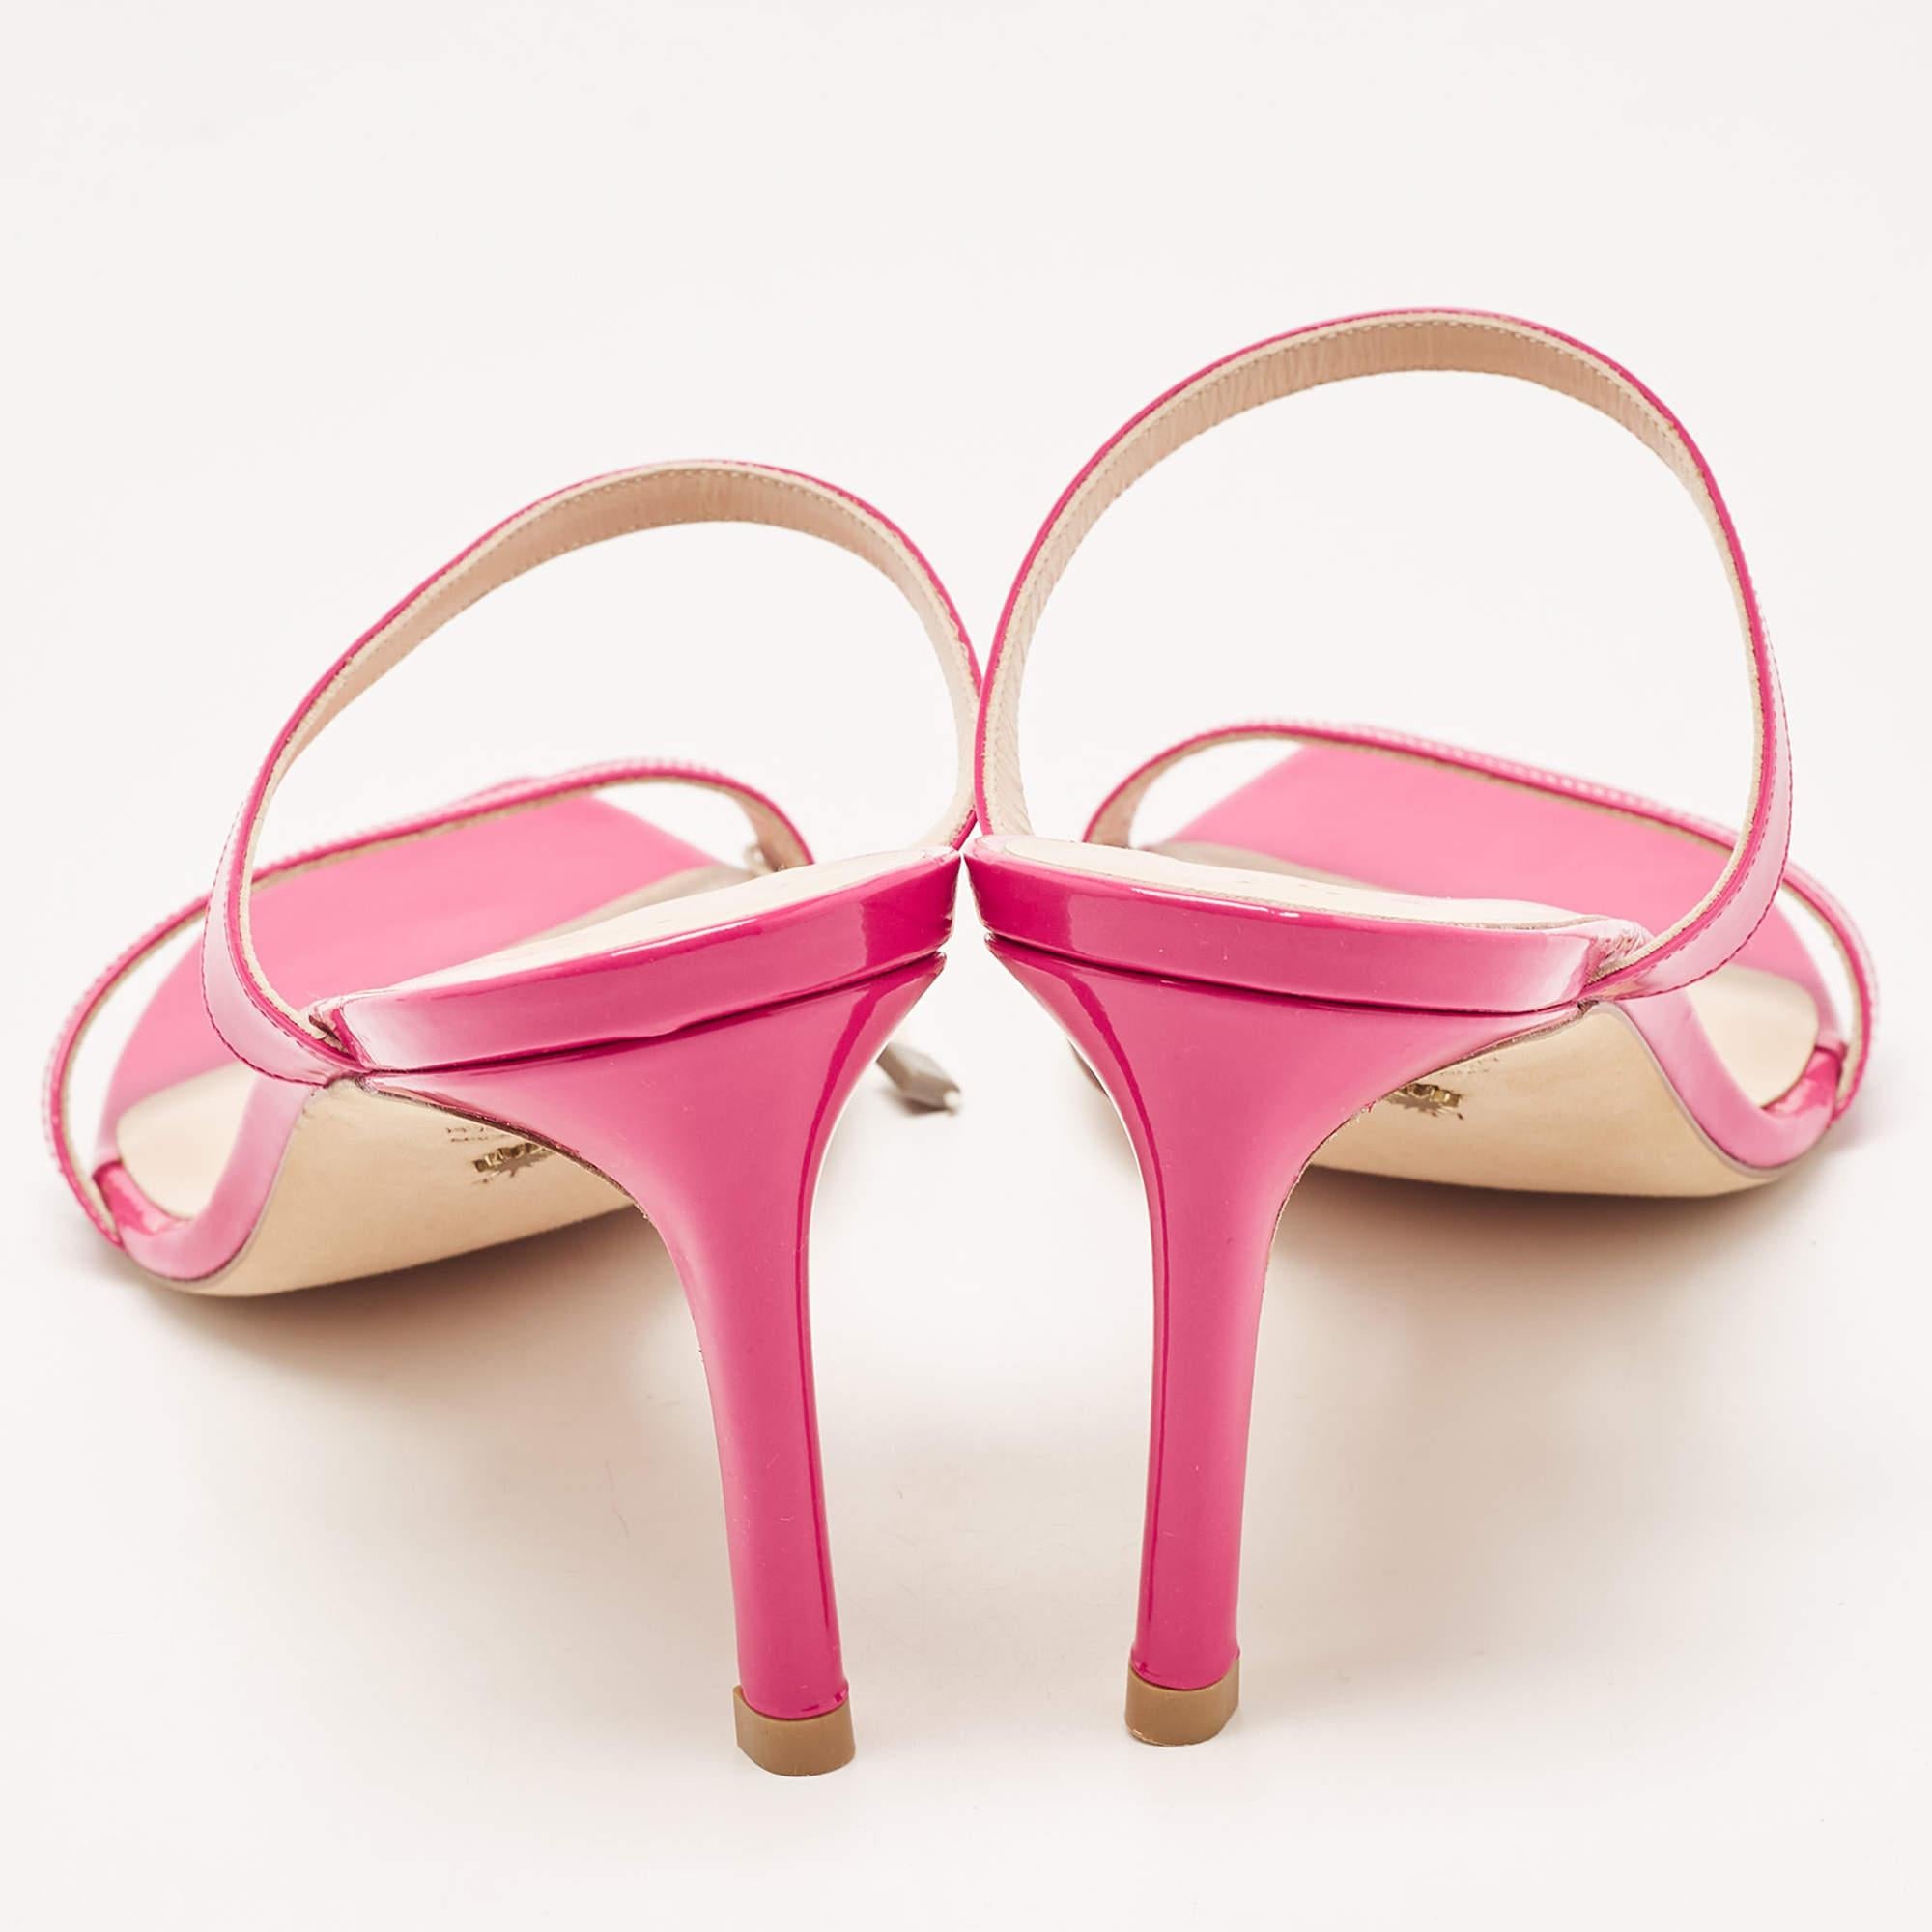 Stuart Weitzman Pink Patent Leather Slide Sandals Size 41 3